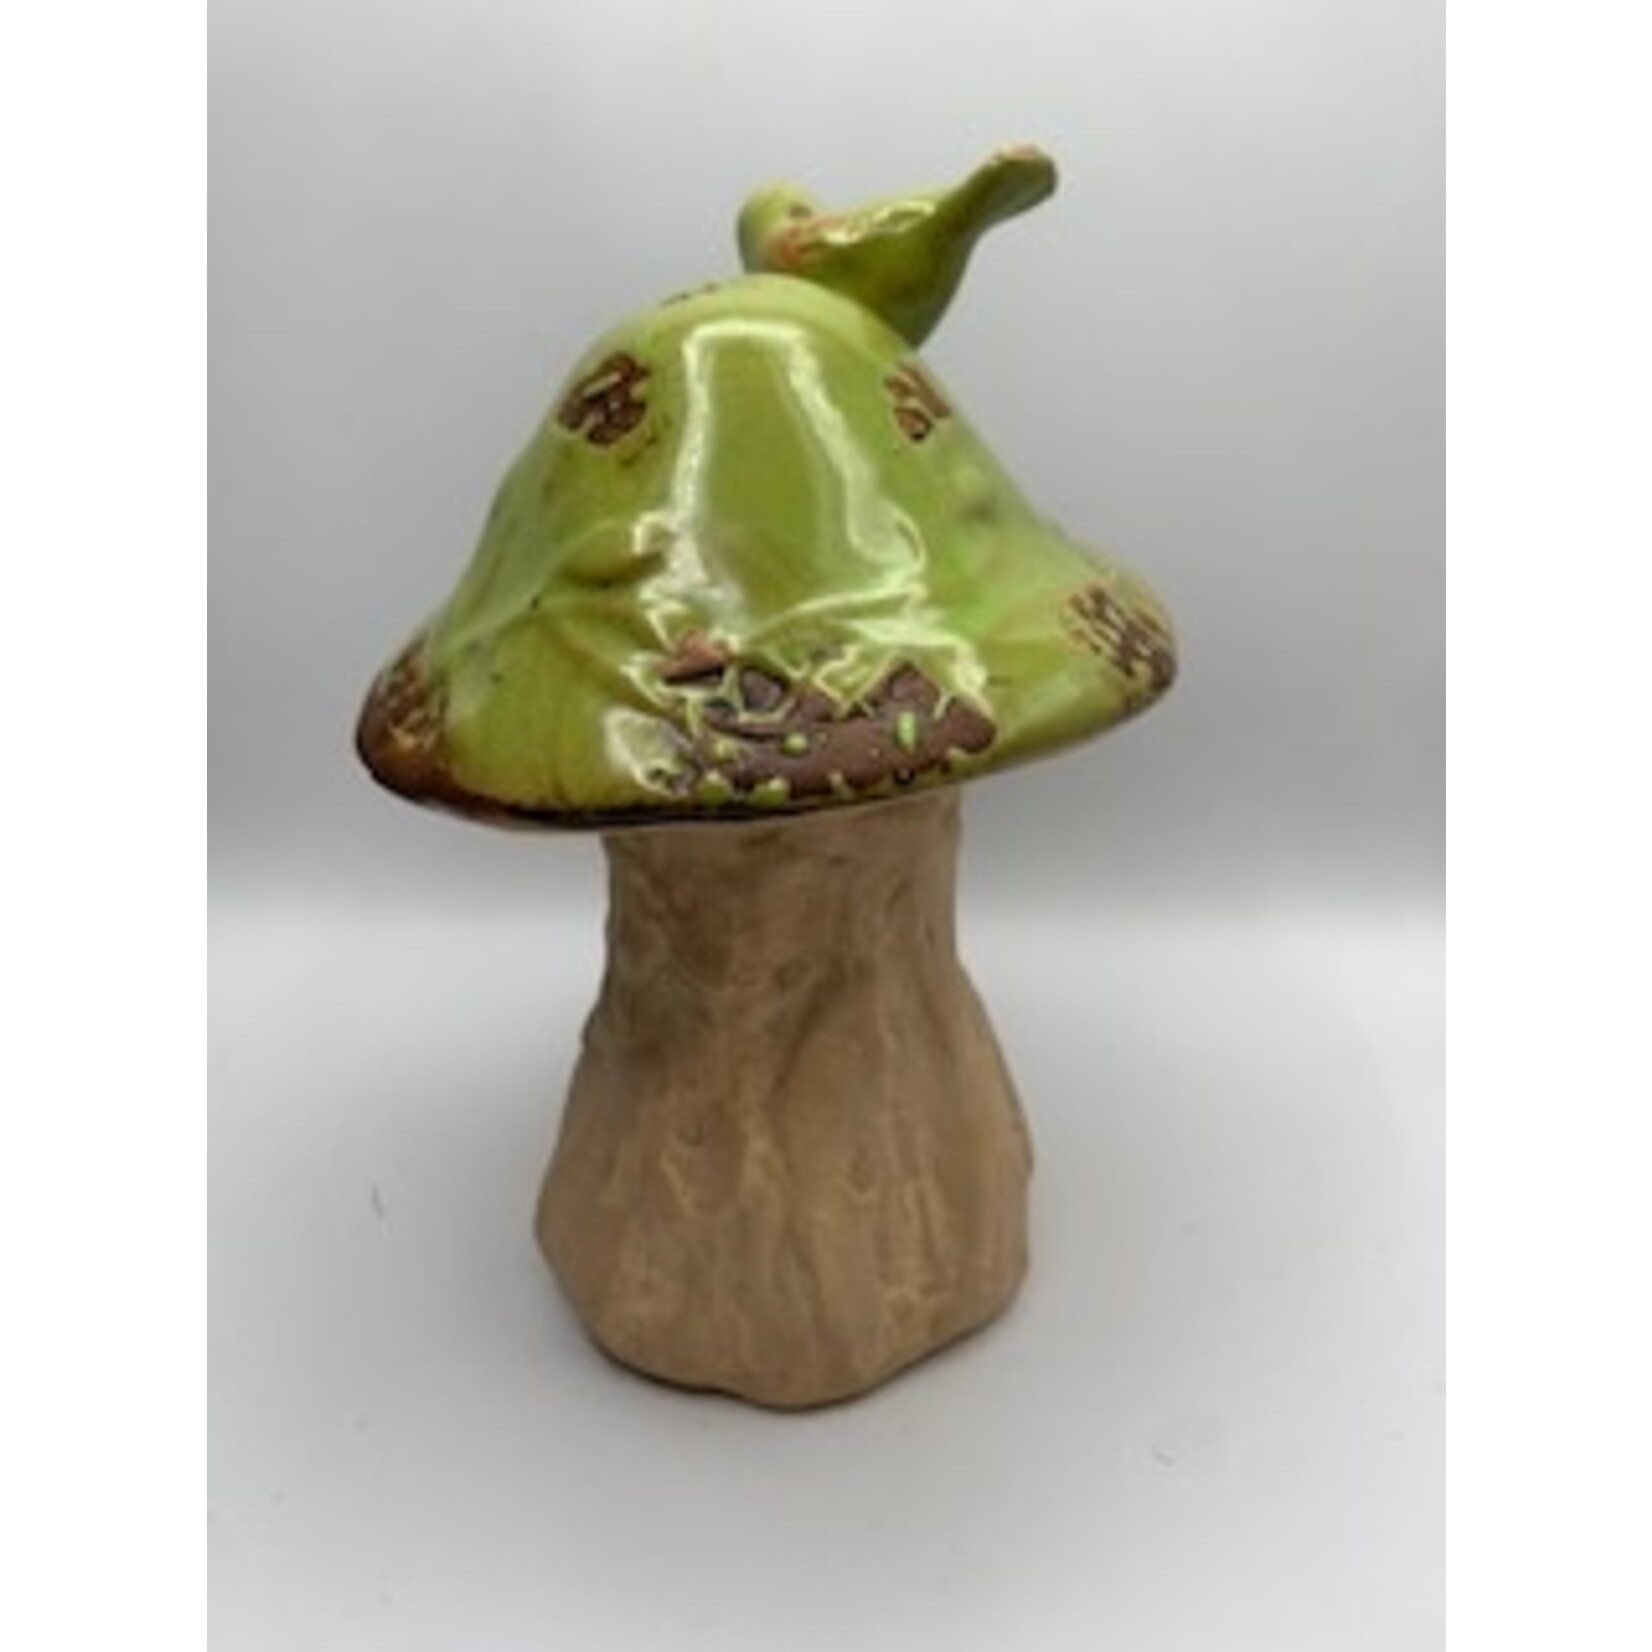 Nova Est Urban Trends Collection Ceramic Mushroom Figurine 7"